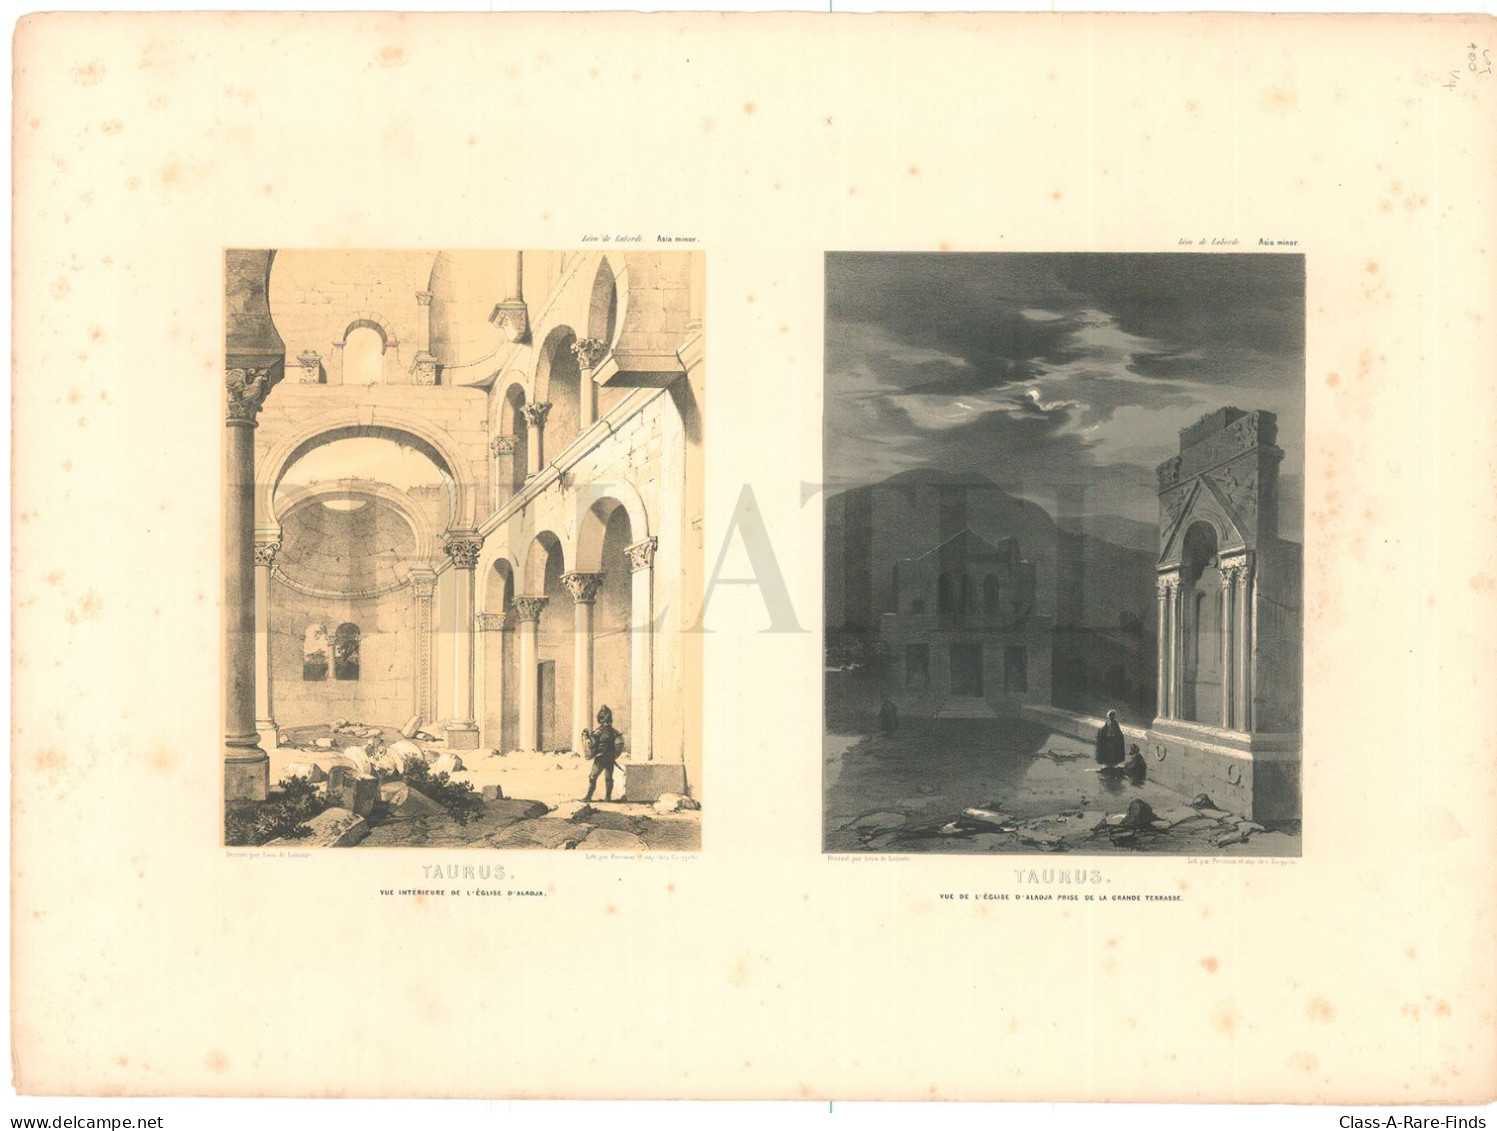 1838, LABORDE: "VOYAGE DE L'ASIE MINEURE" LITOGRAPH PLATE #69. ARCHAEOLOGY / TURKEY / ANATOLIA / SIVAS / ALACA - Archäologie